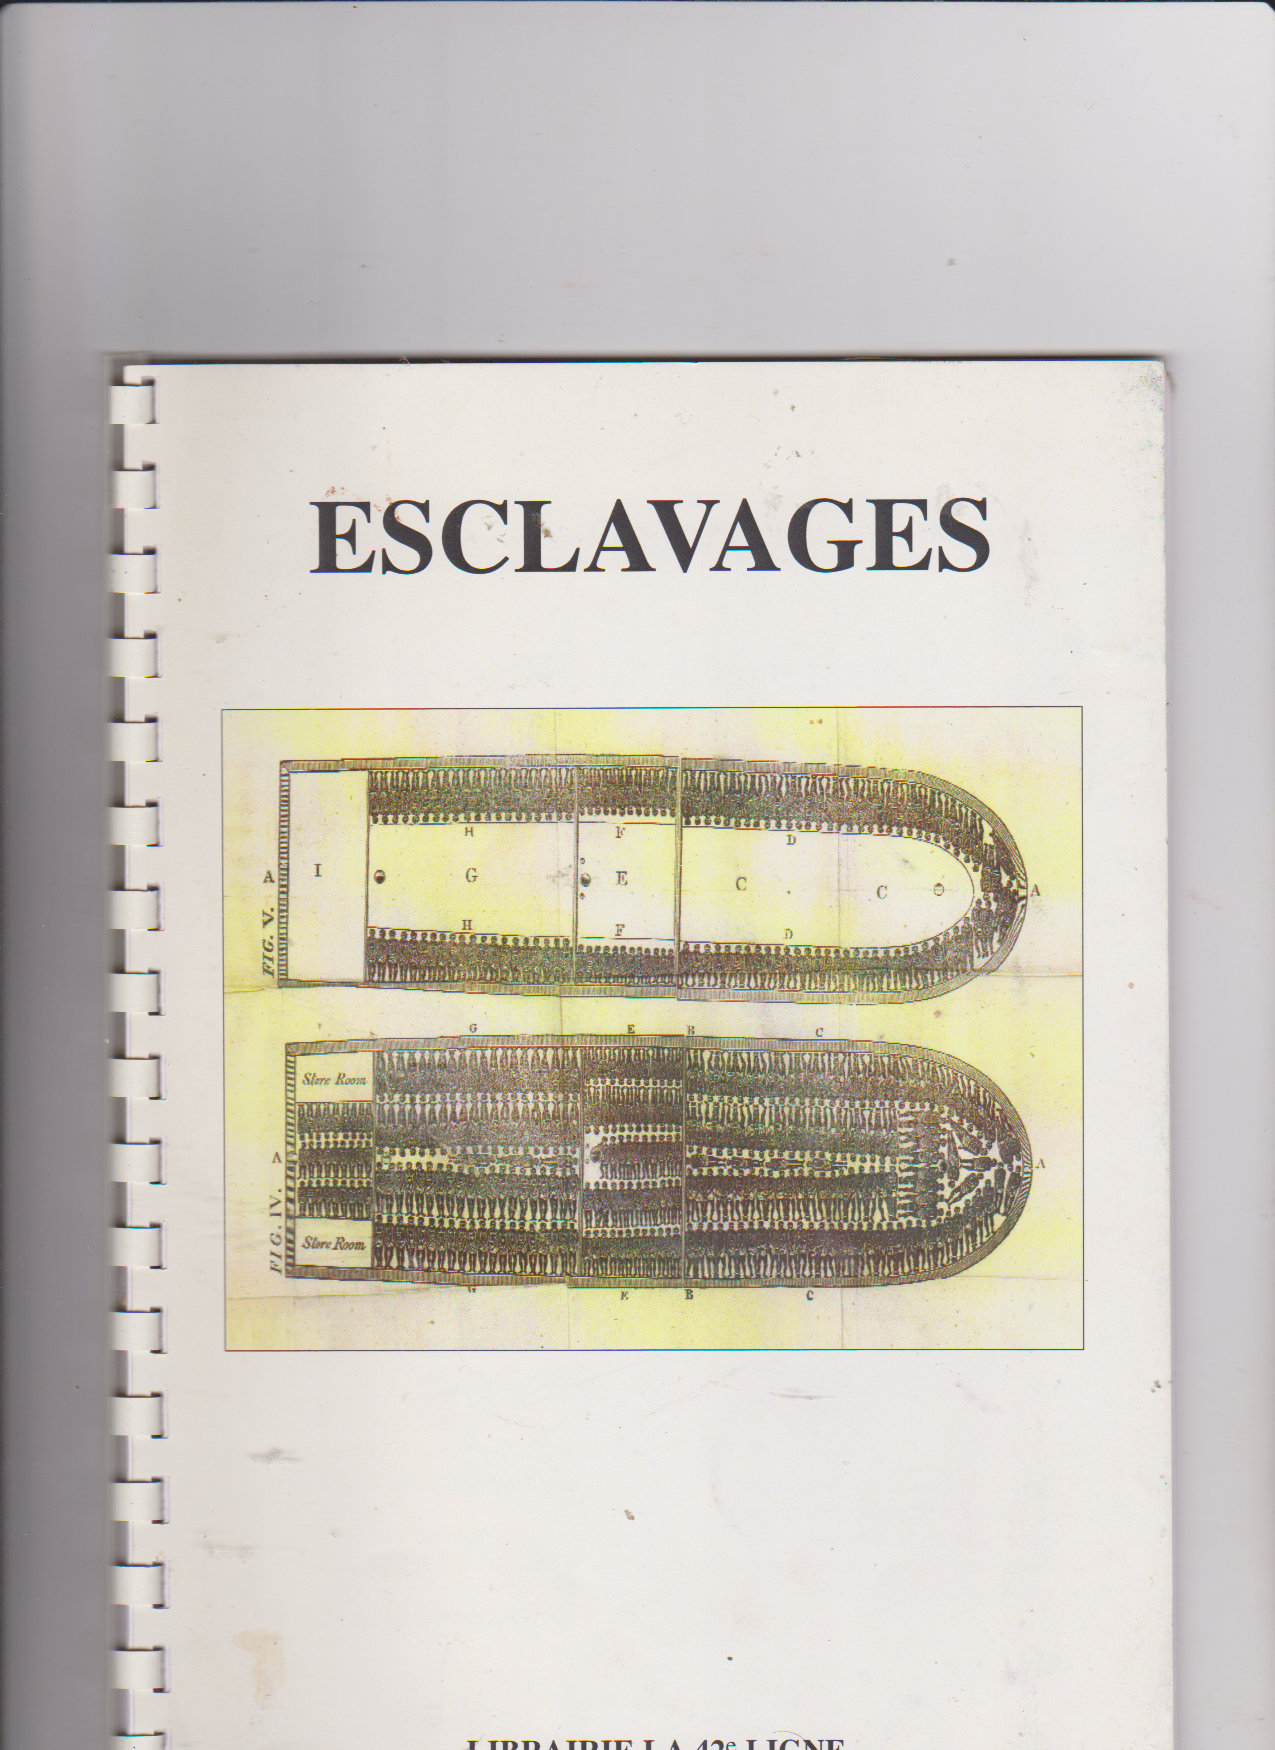 esclavages-catalogue.jpg